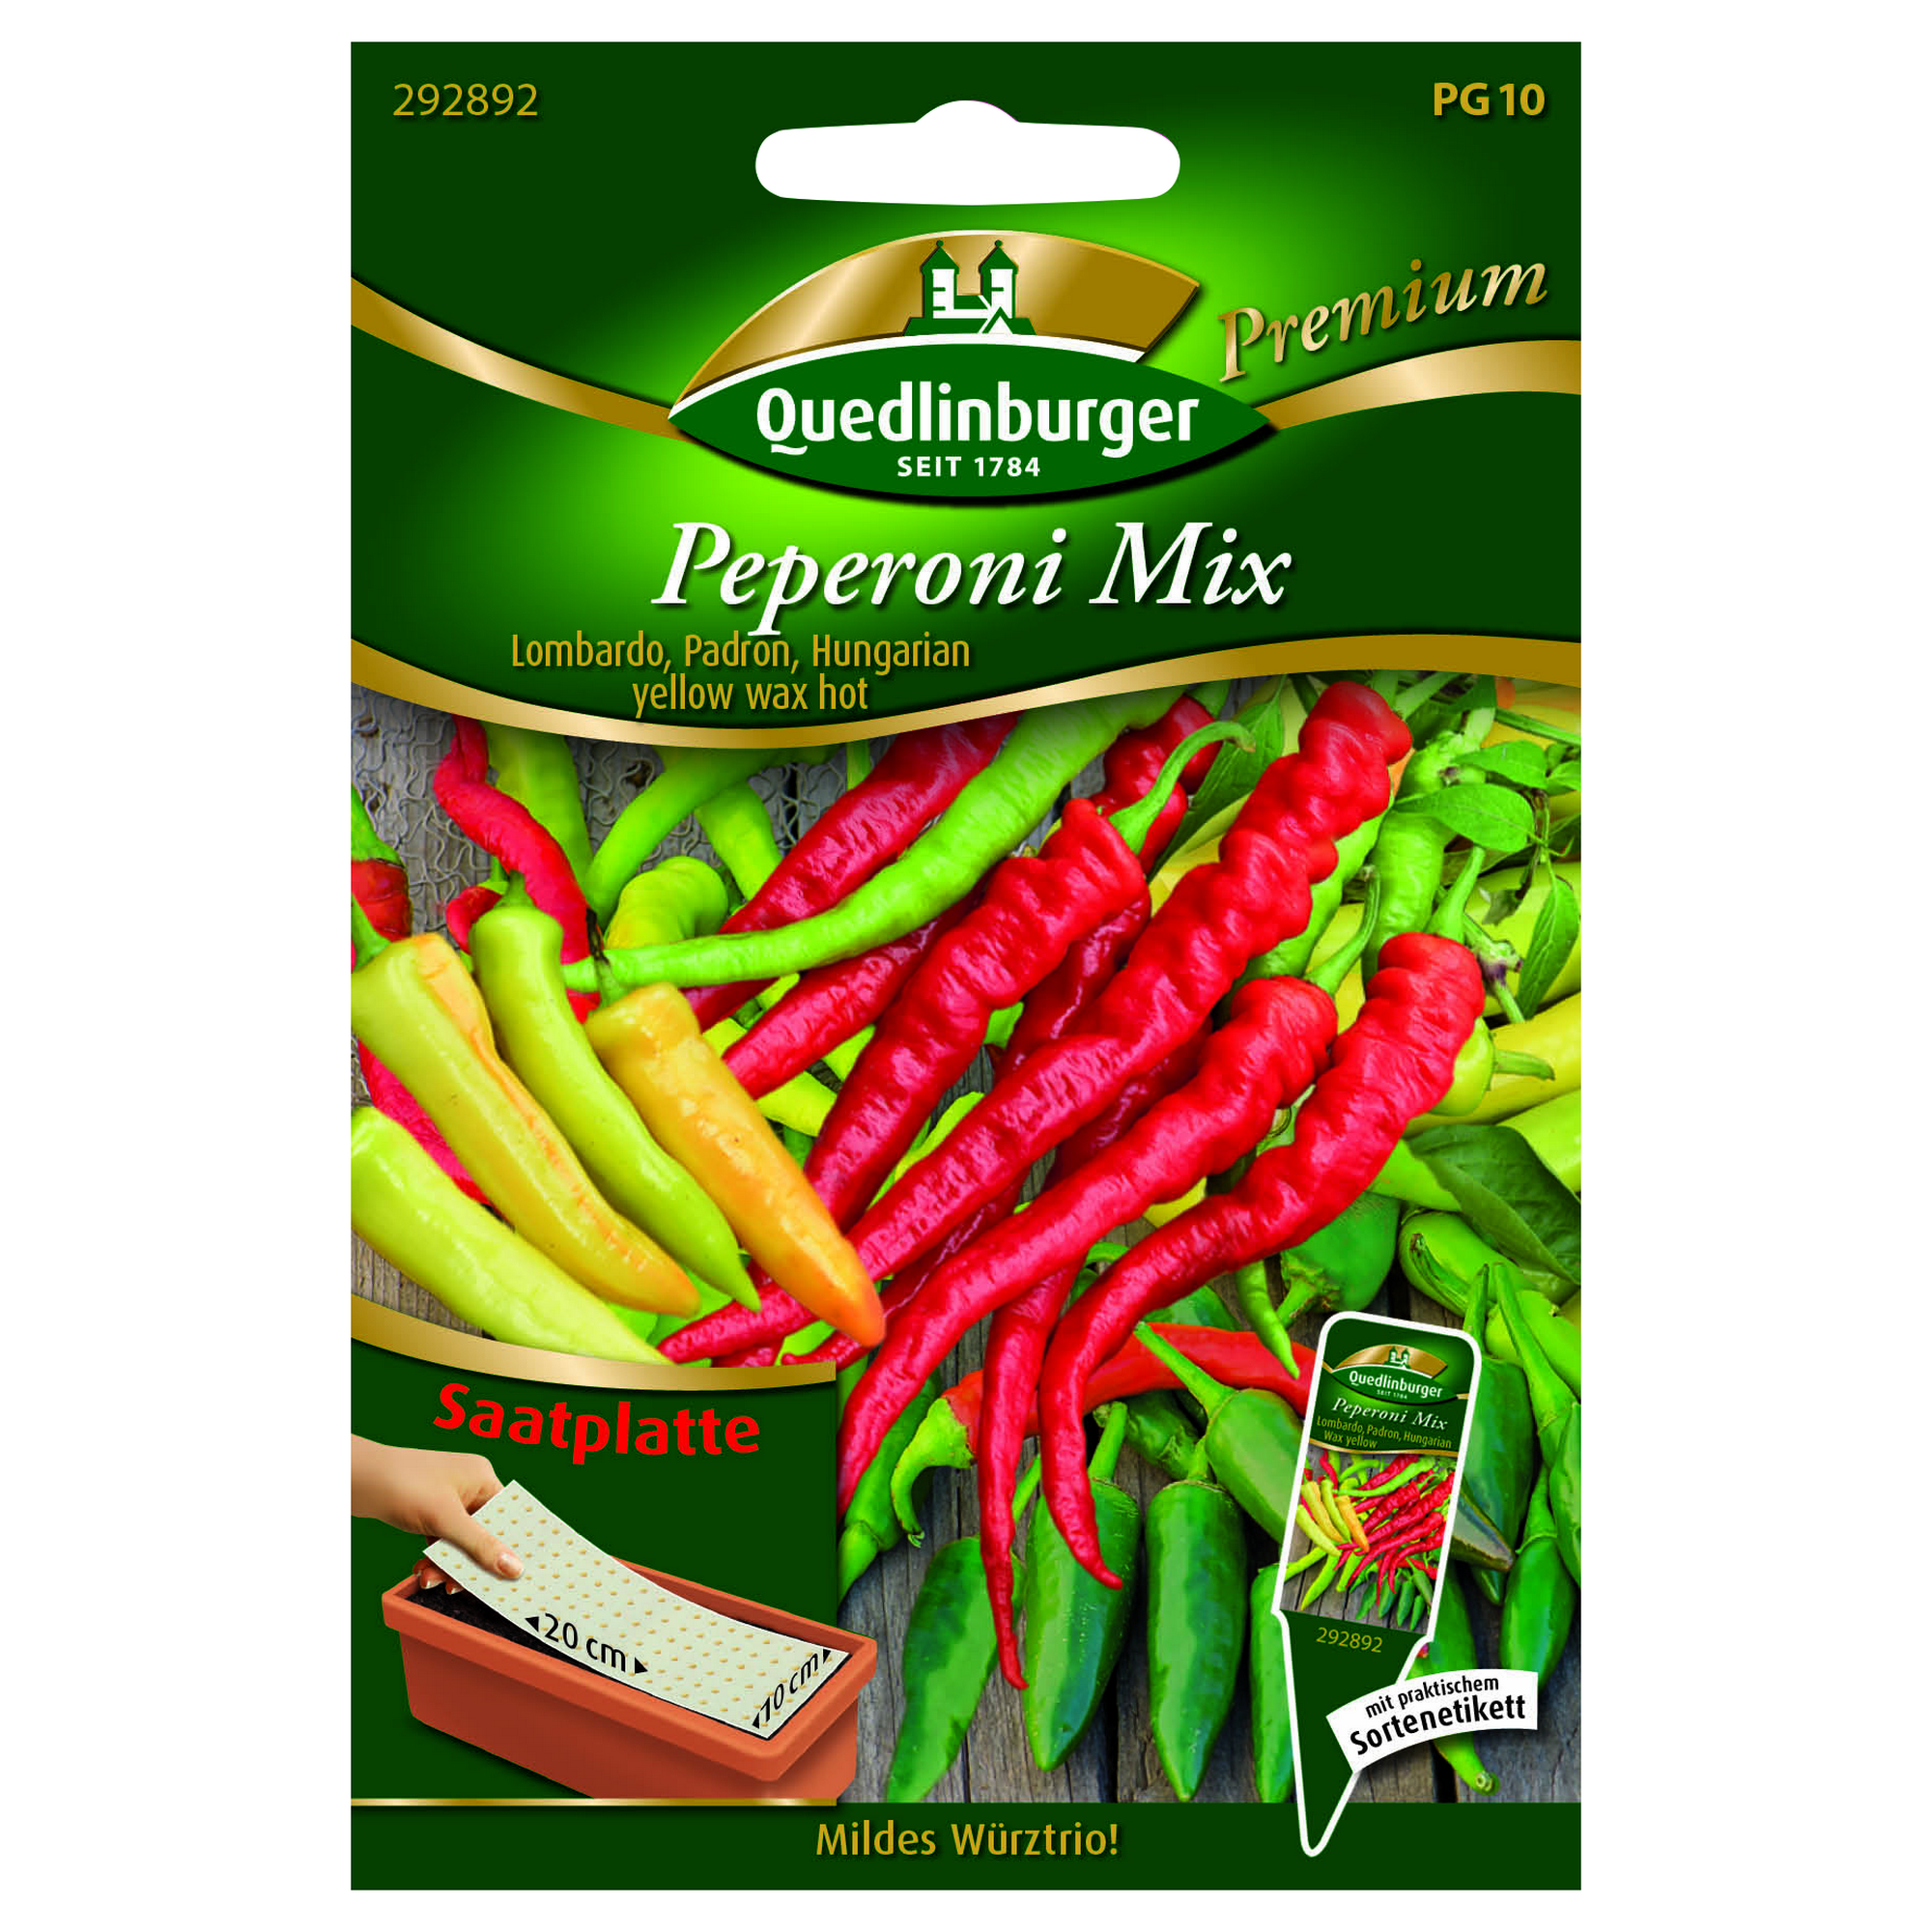 Premium Peperoni 'Mix' + product picture